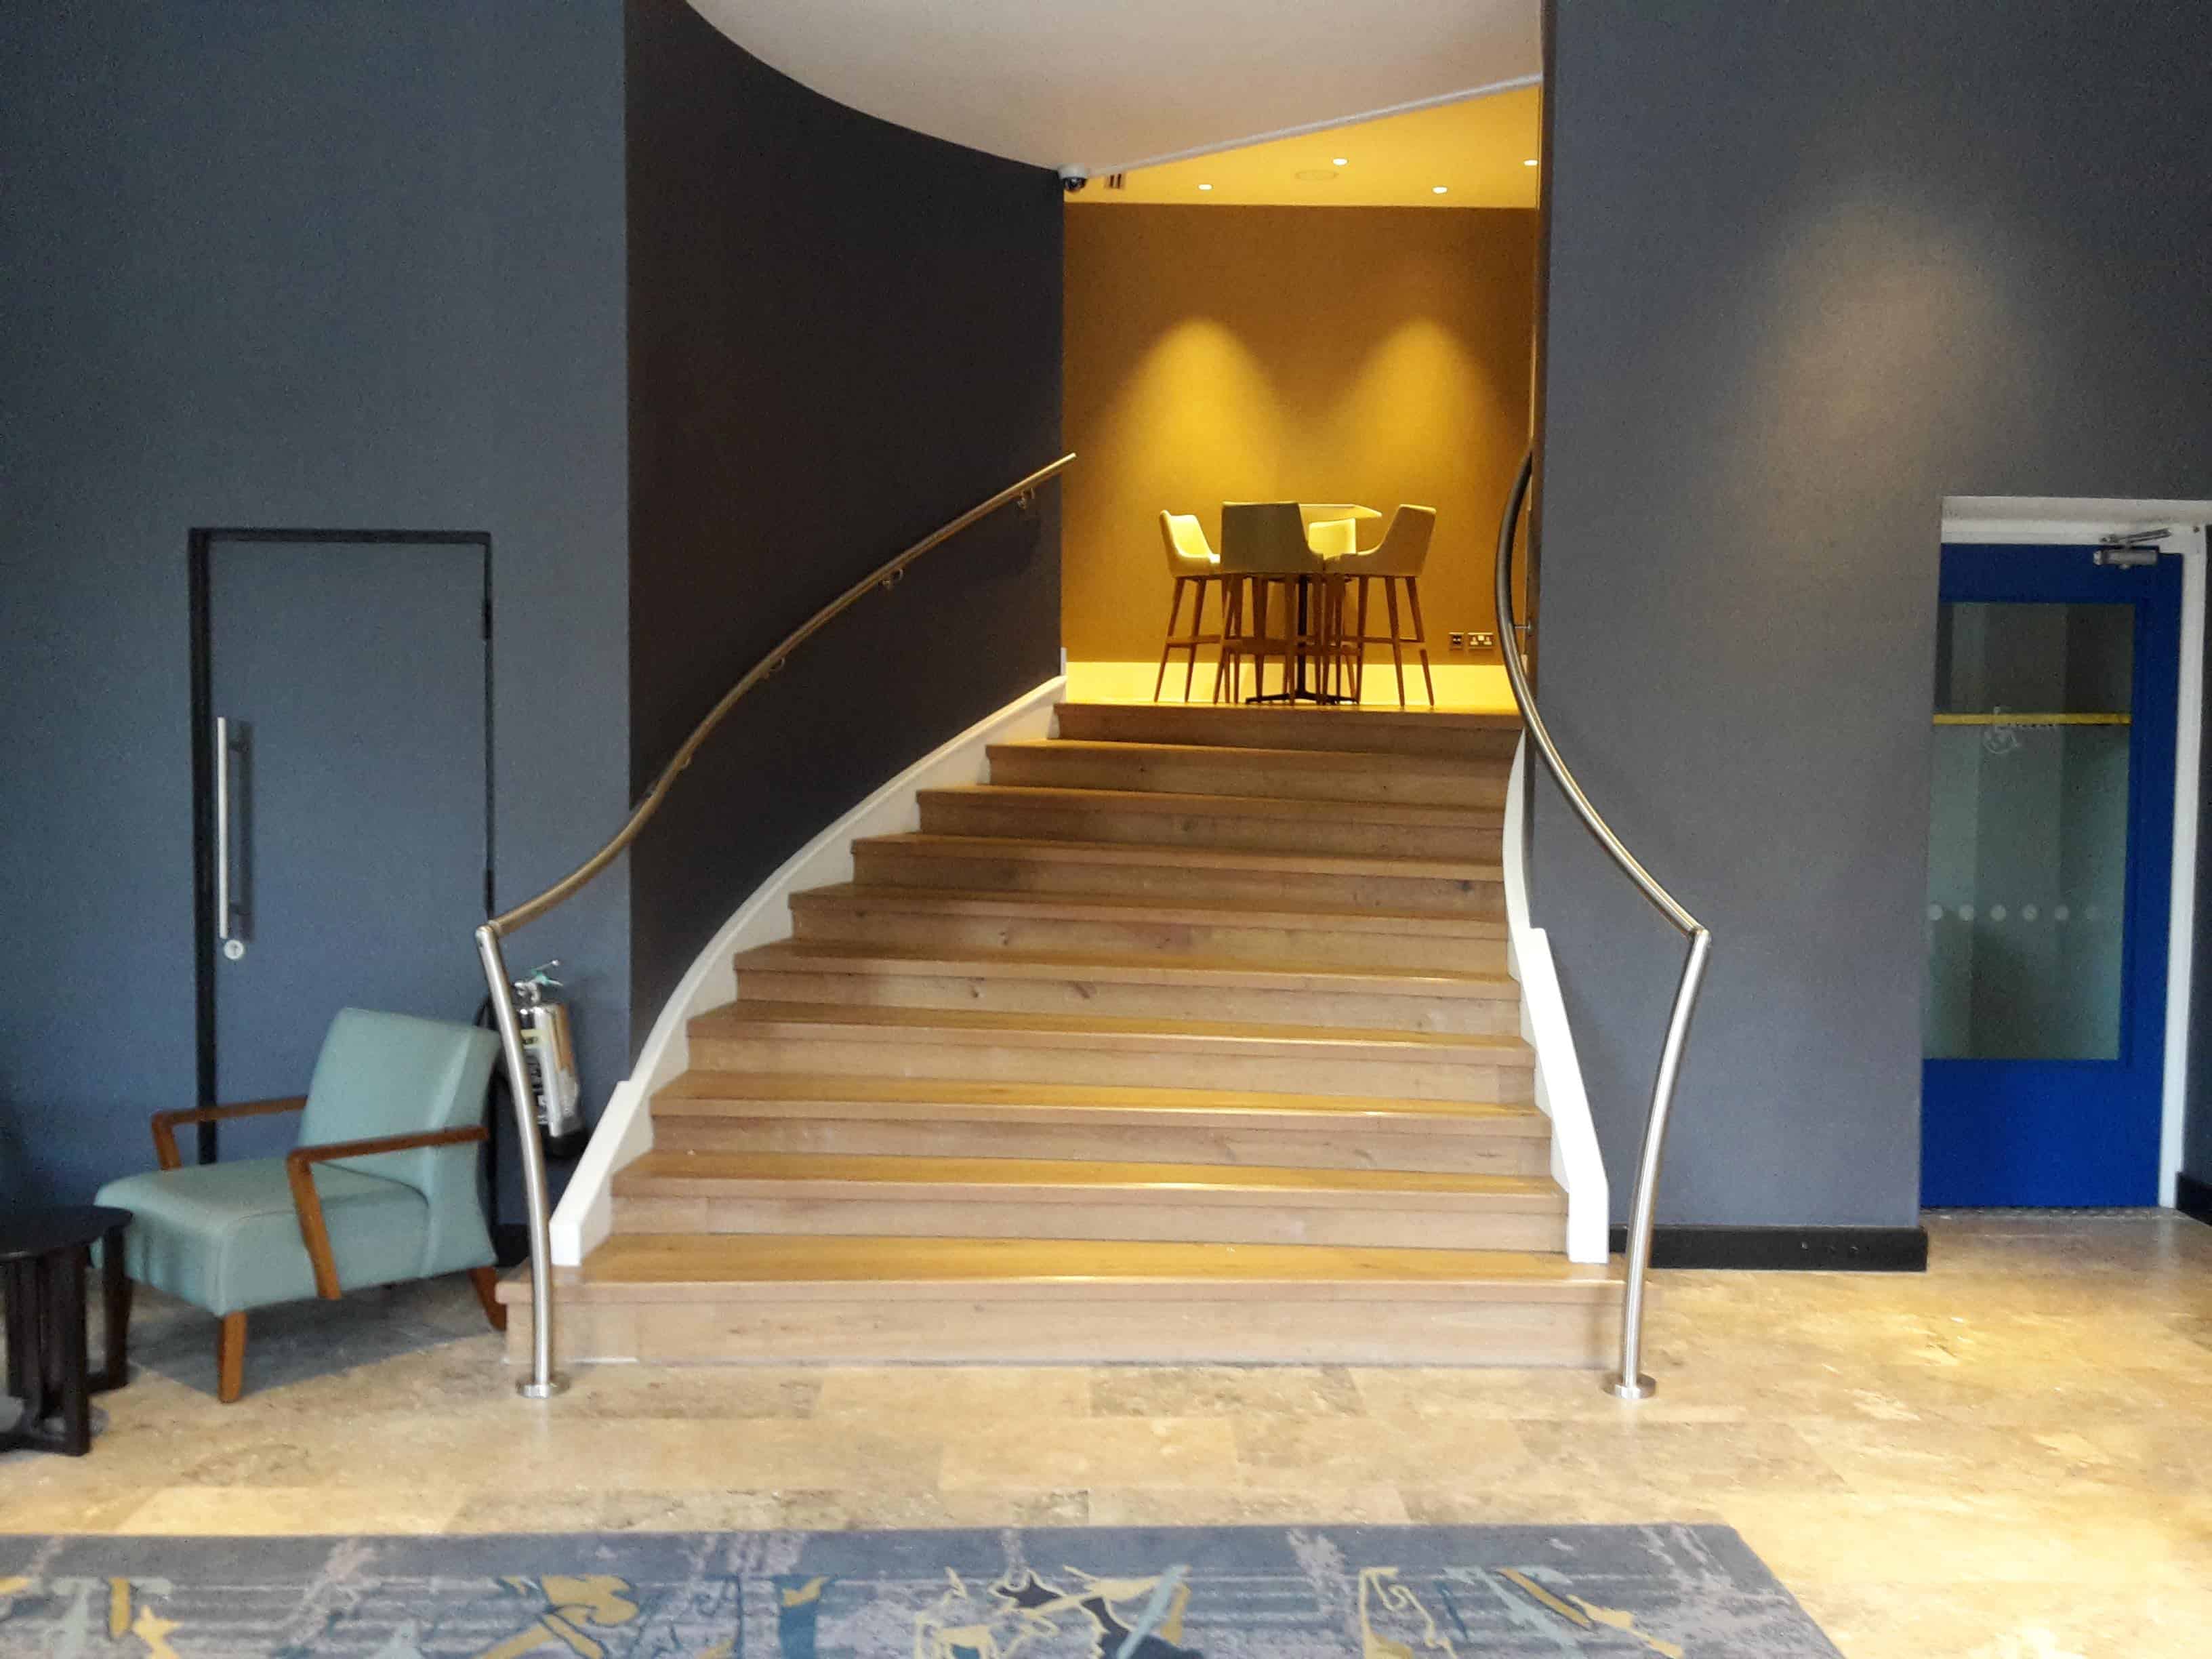 stainless steel handrails in uk hotel